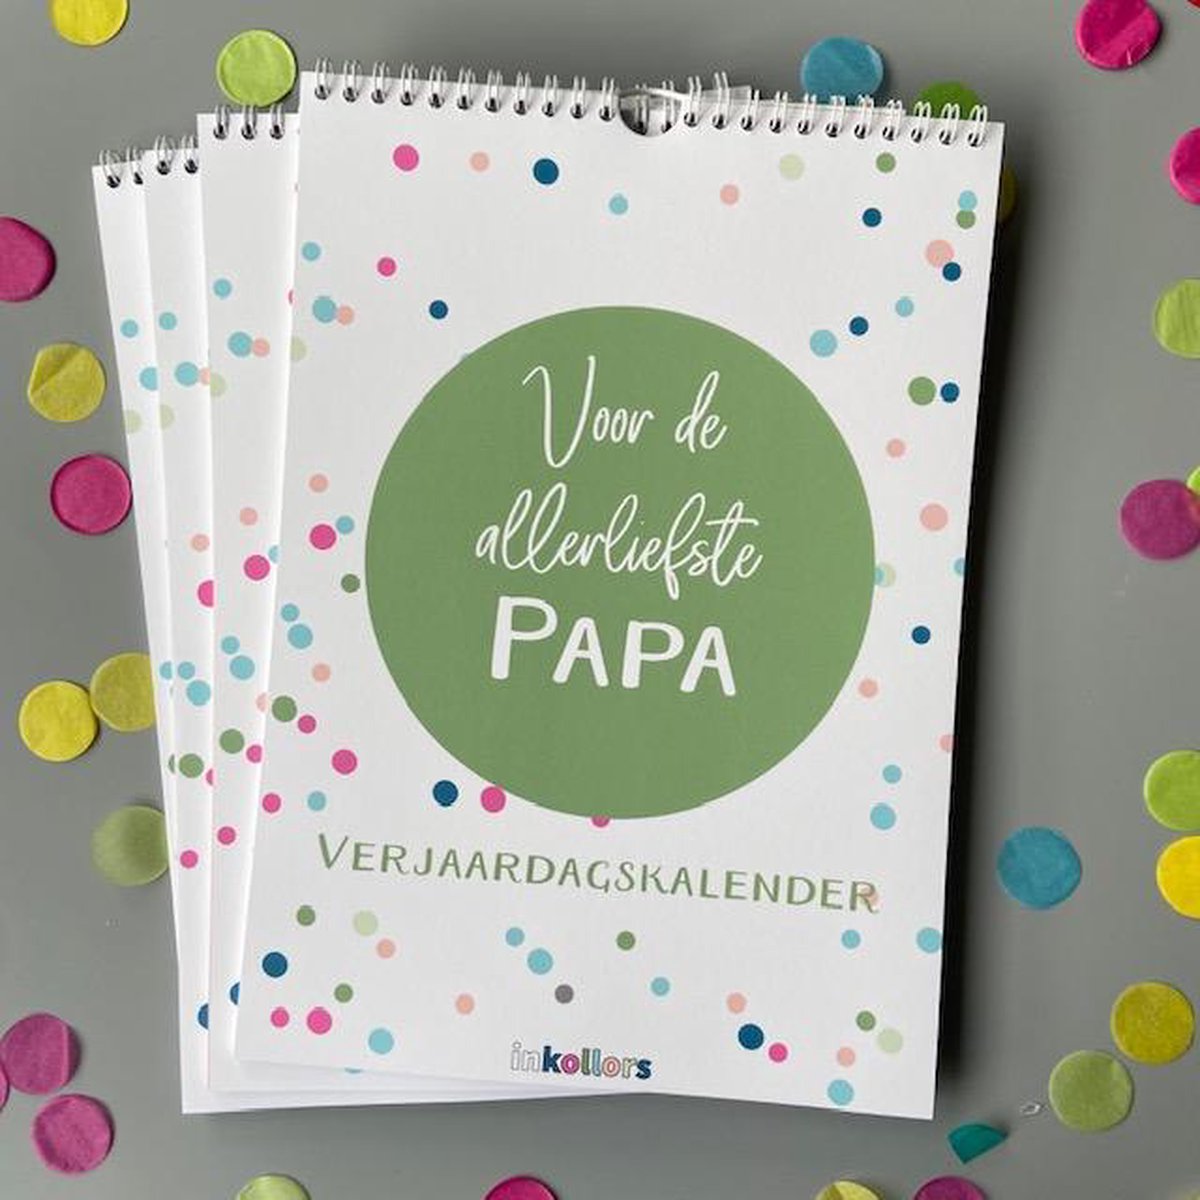 Verjaardagskalender - A4 - confetti - vrolijk - kalender - familiekalender - verjaardag - feest - inkollors - groen - papa - vader - cadeau - kado